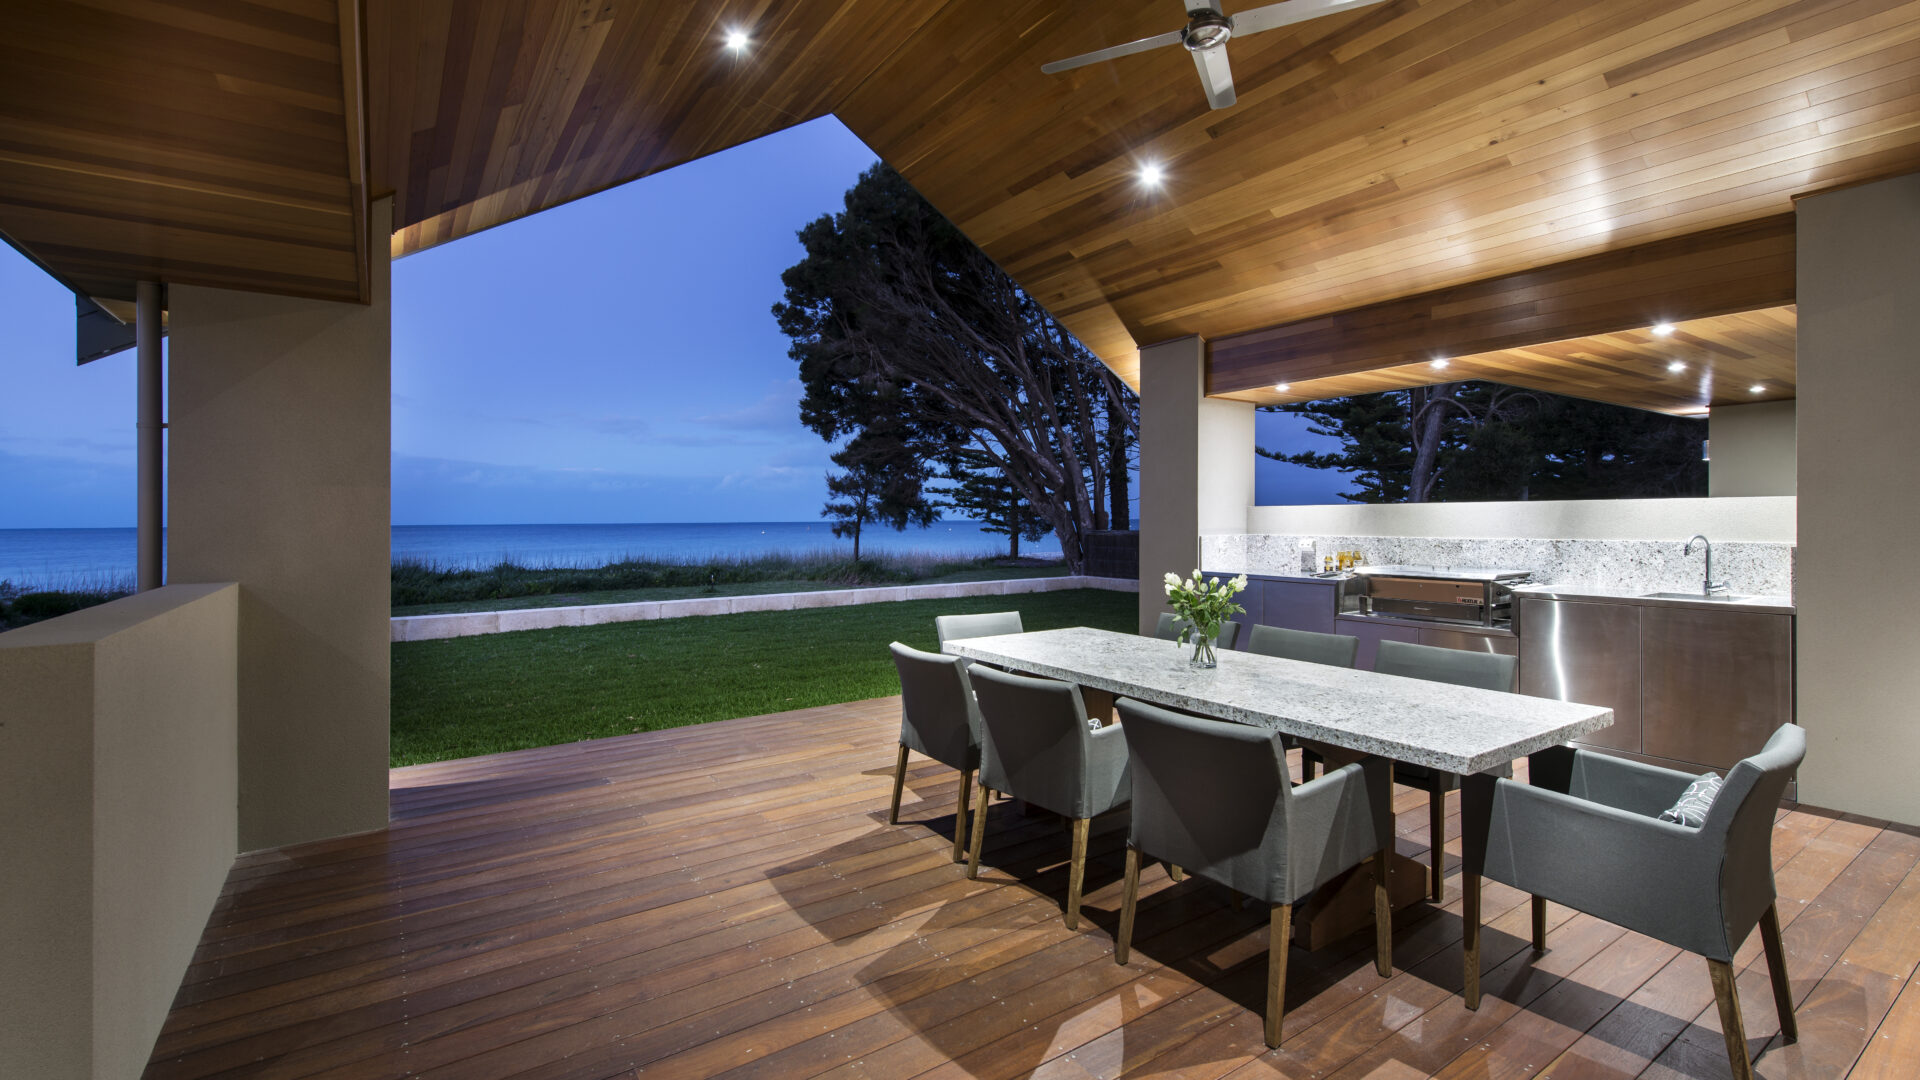 Beach House: Luxury Coastal Home - alfresco